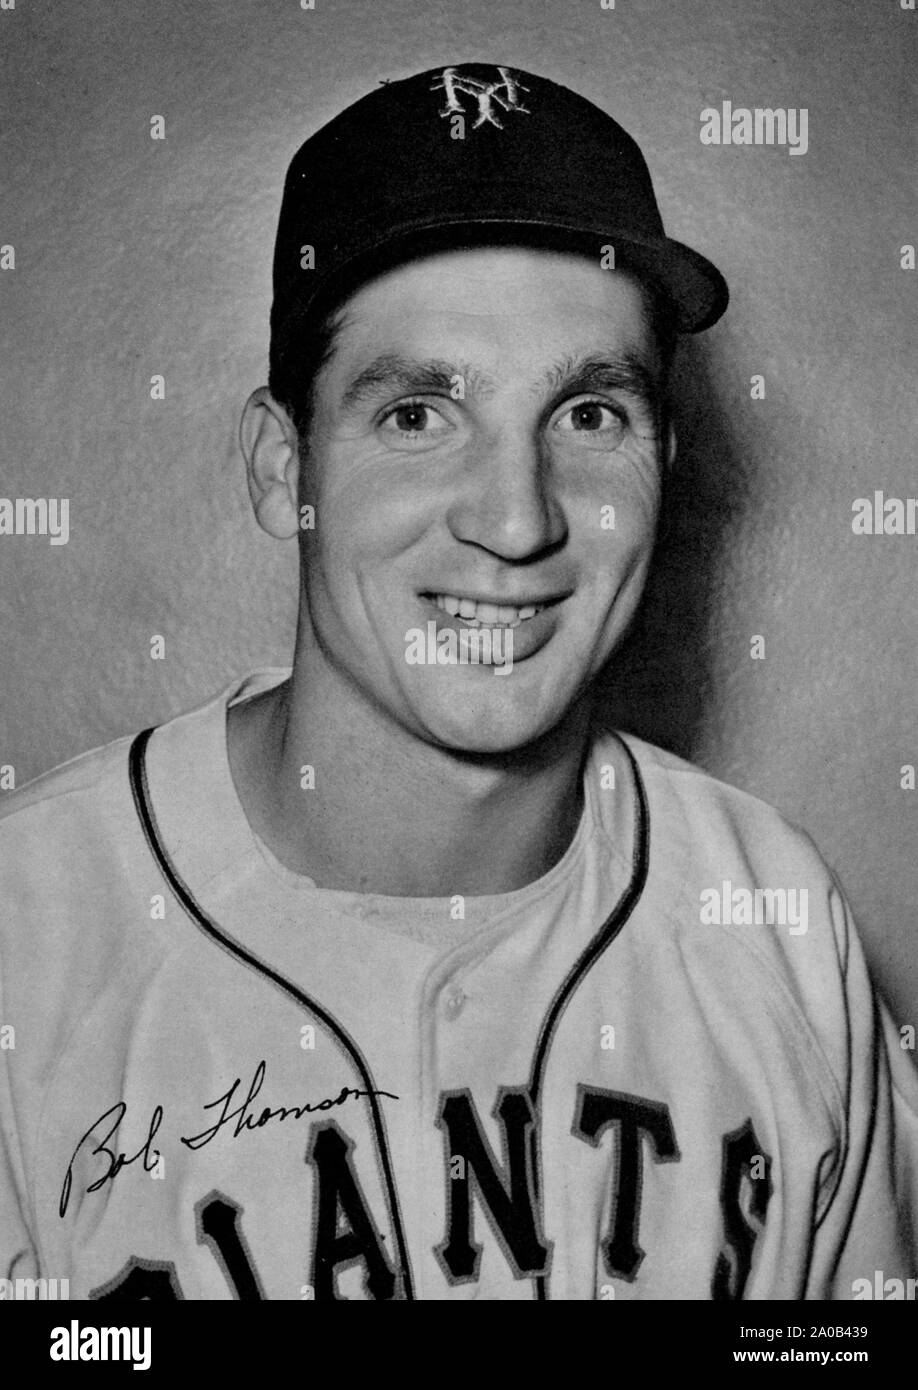 Vintage photograph of baseball player Bobby Thompson who played ...